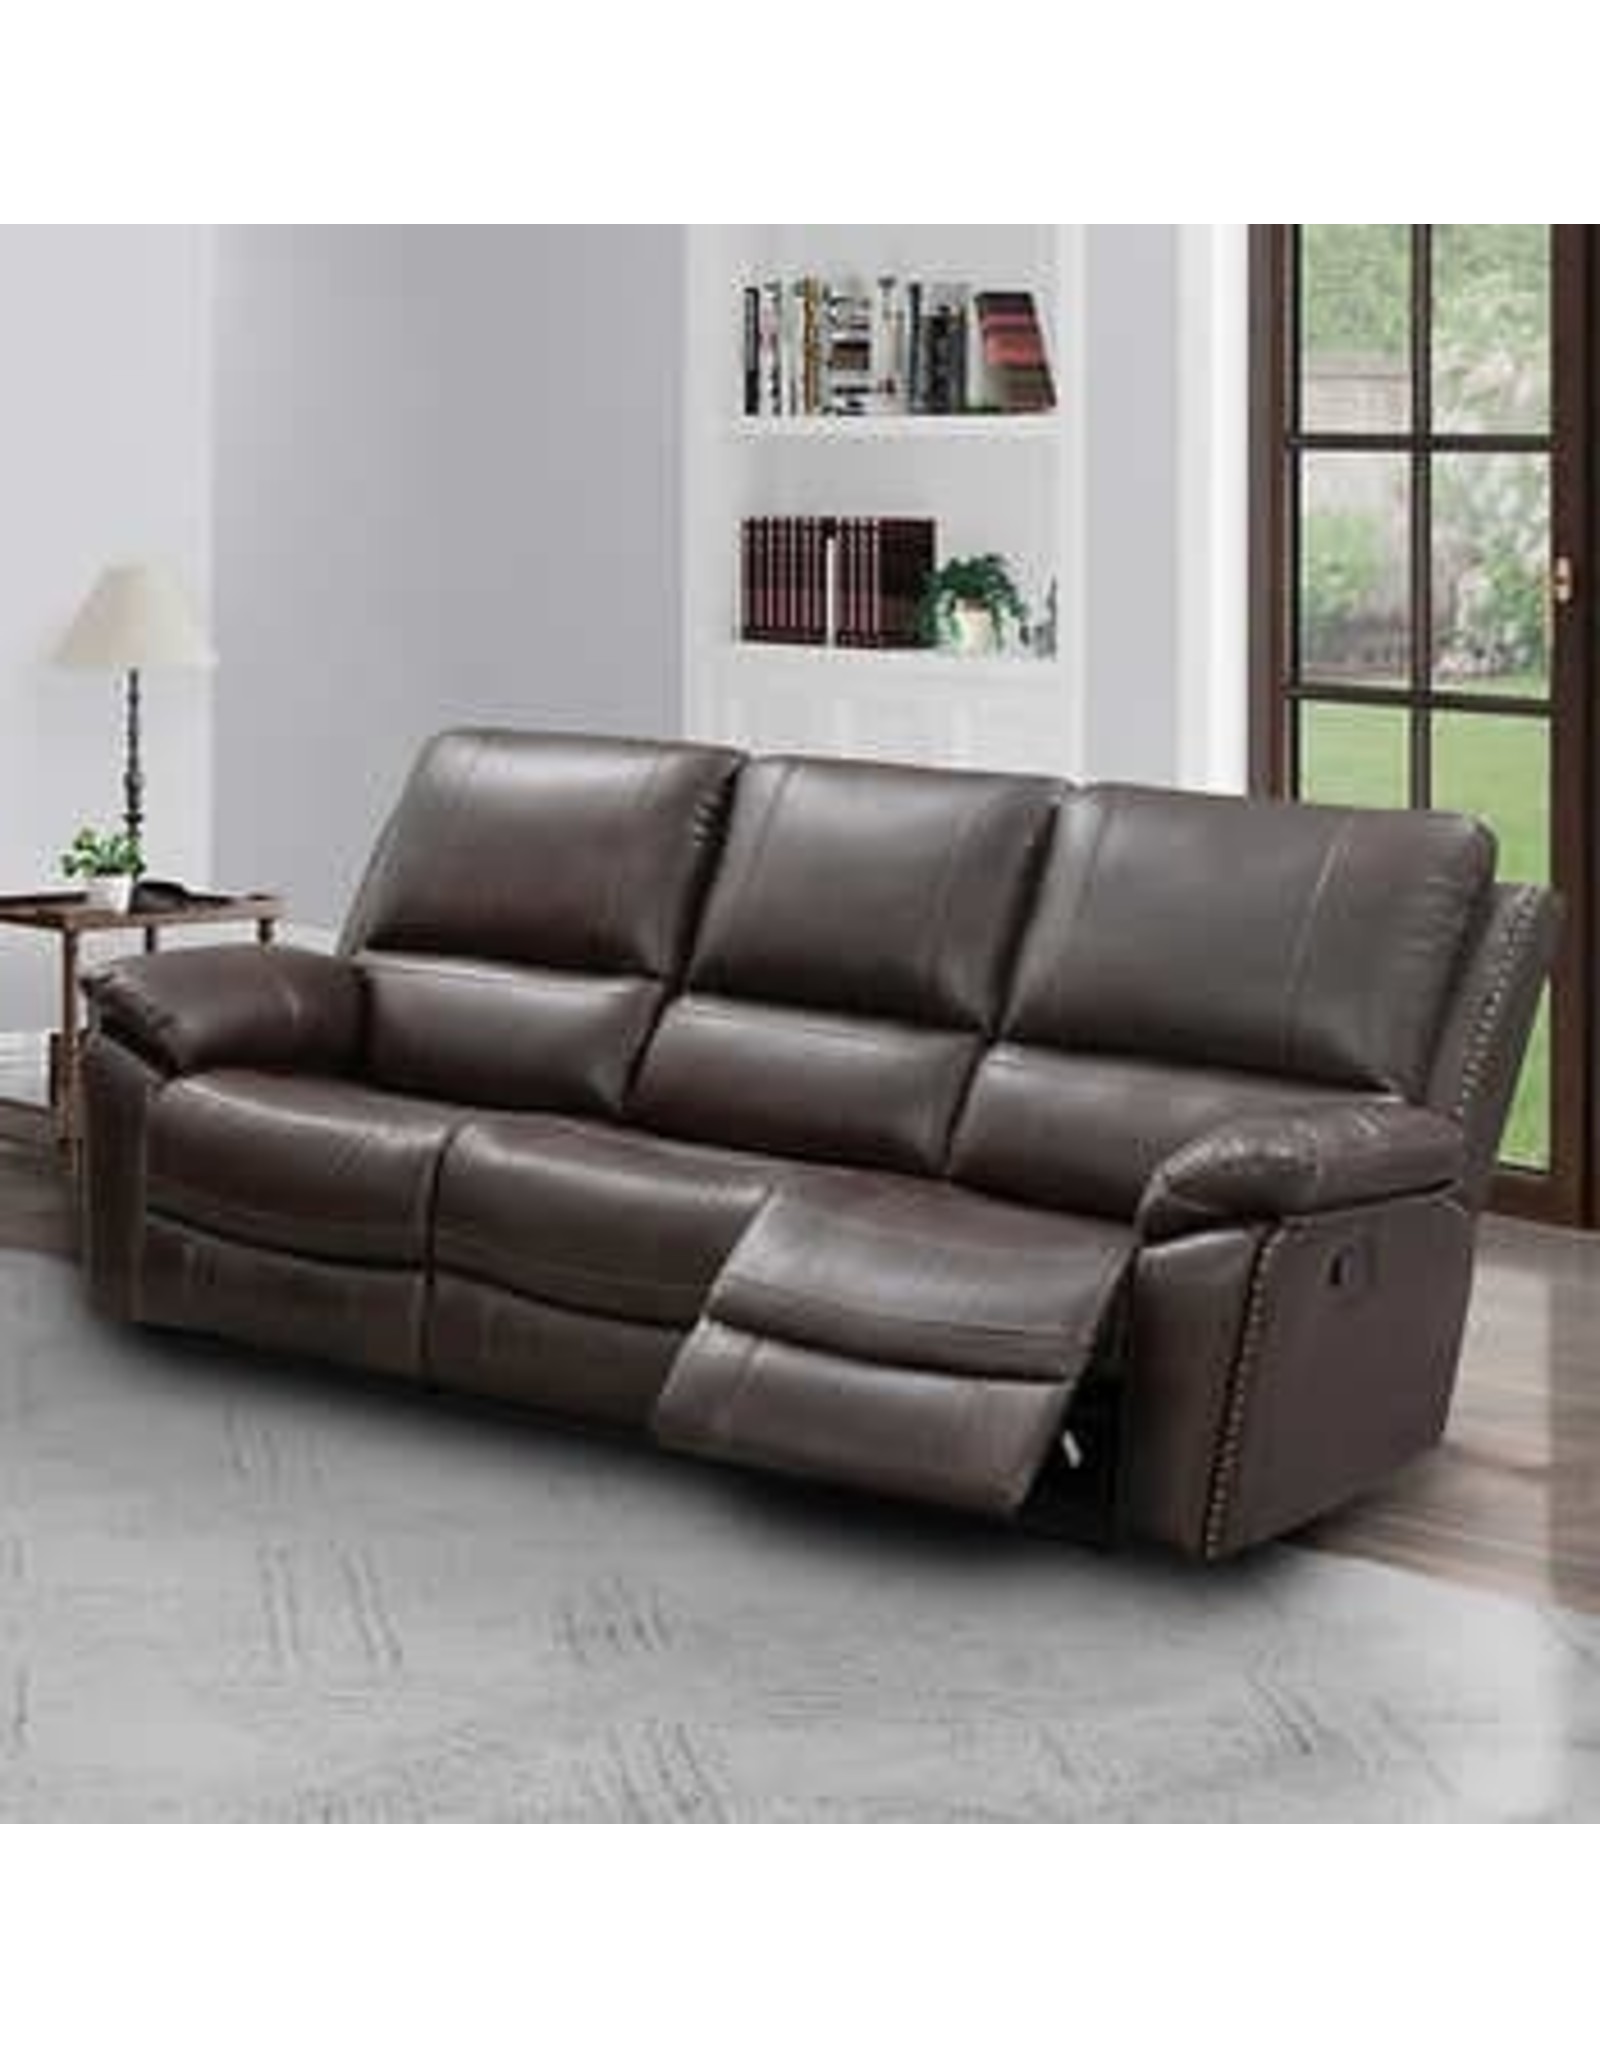 soldano Soldano Leather Reclining Sofa